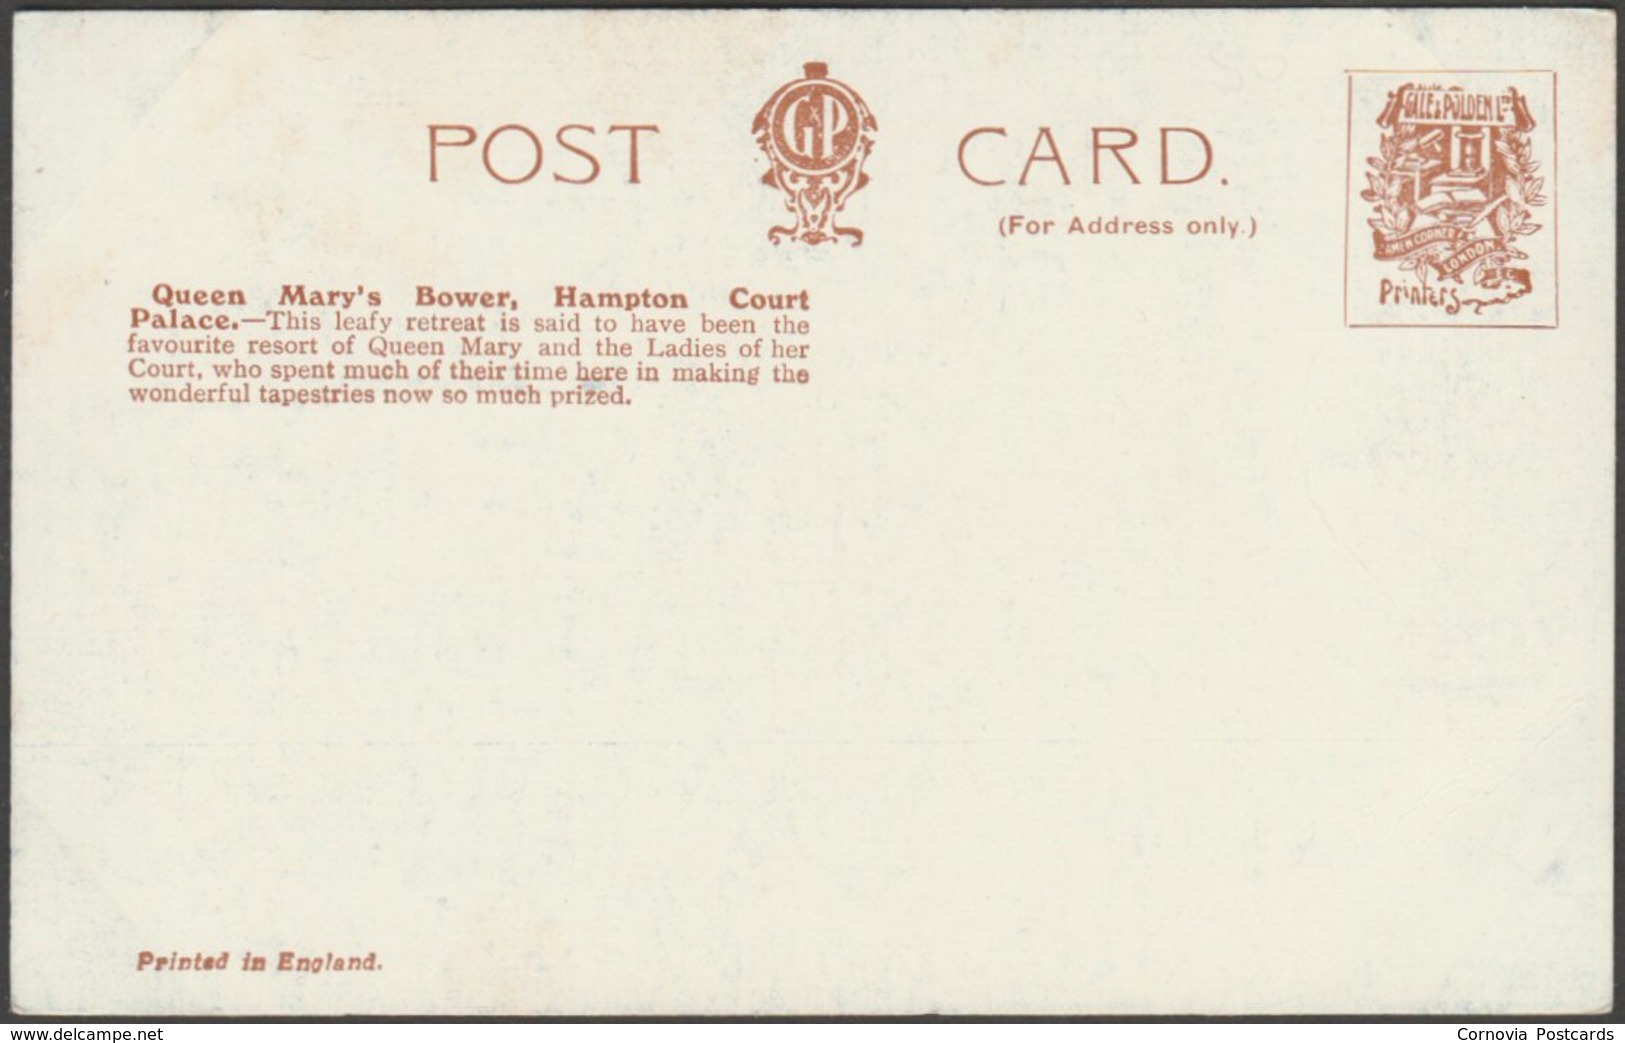 Queen Mary's Bower, Hampton Court Palace, Surrey, C.1910s - Gale & Polden Postcard - Hampton Court